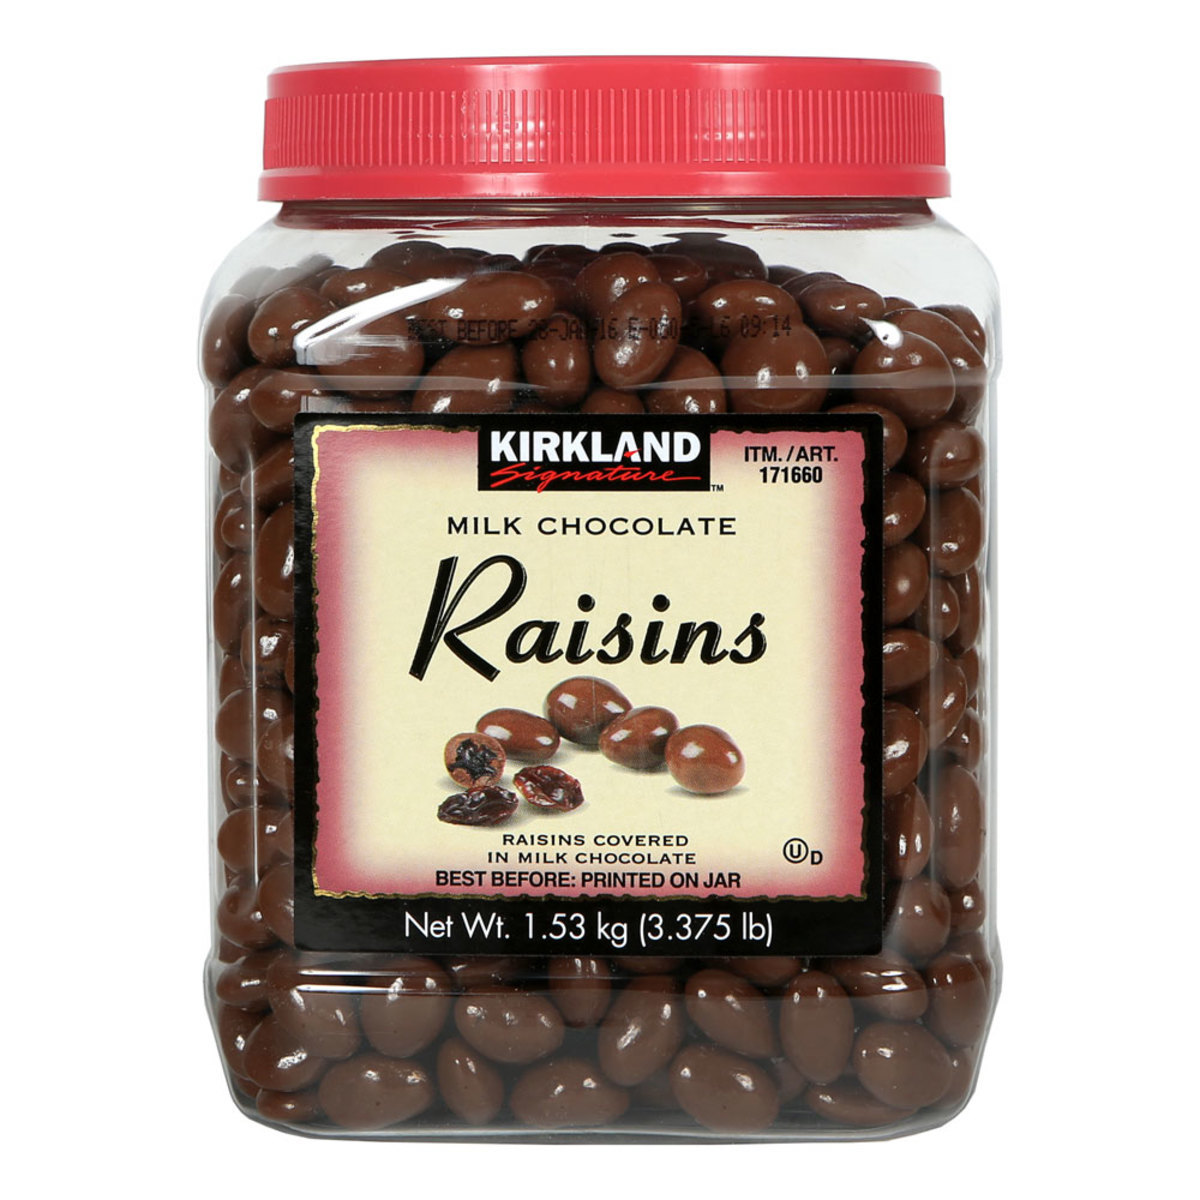 Kirkland Signature Milk Chocolate Raisins, 1.53kg